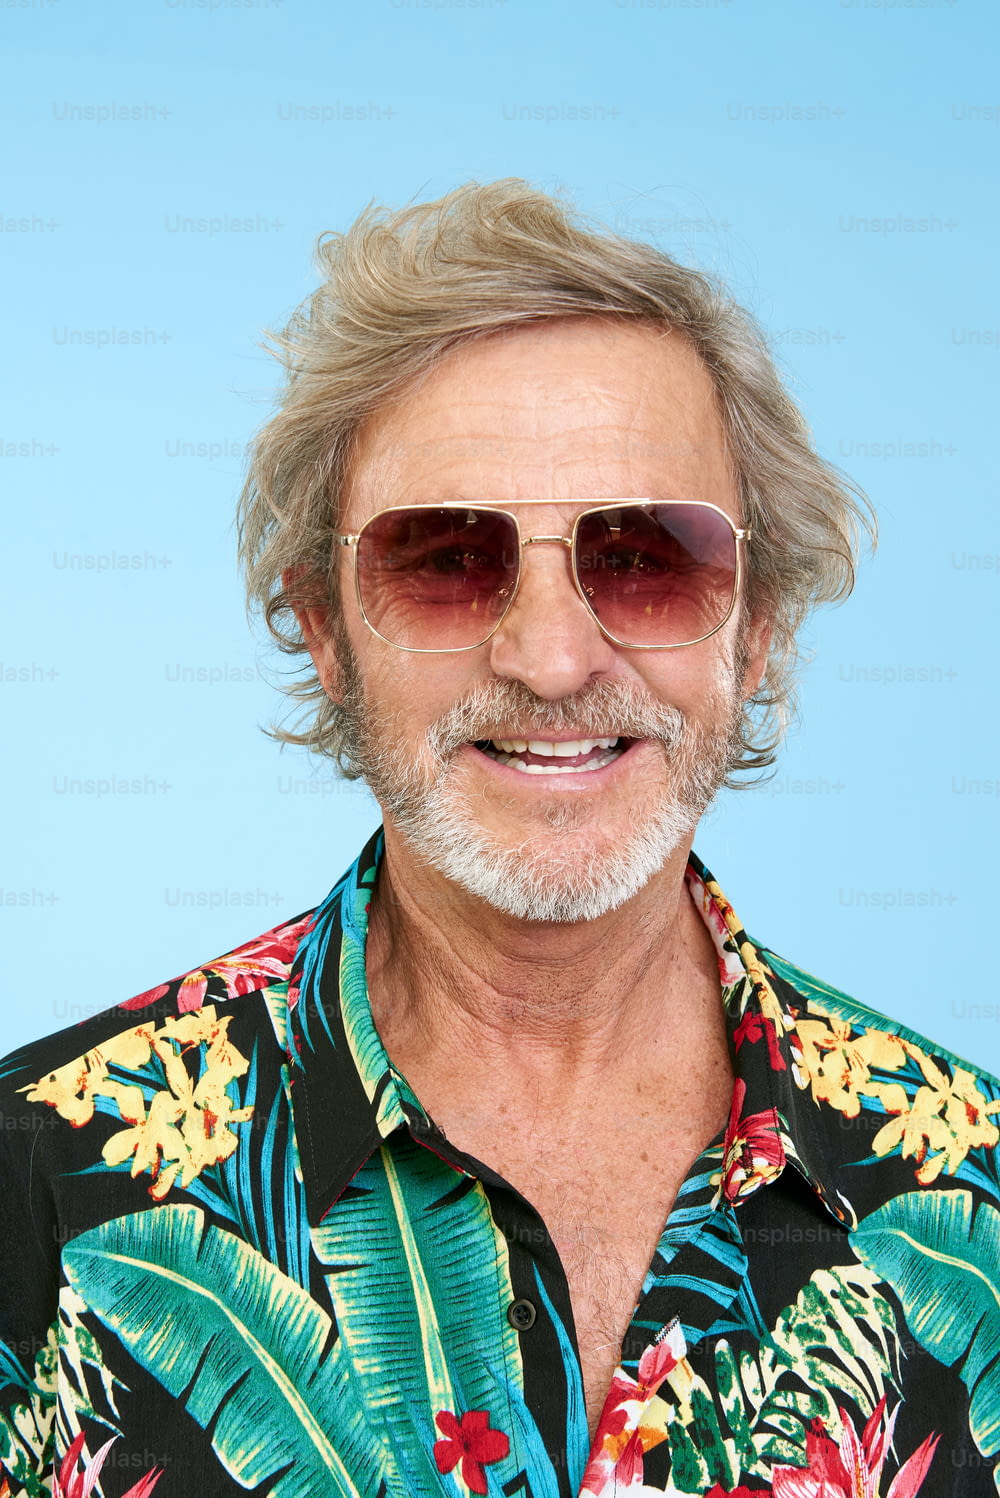 a man wearing a hawaiian shirt and sunglasses